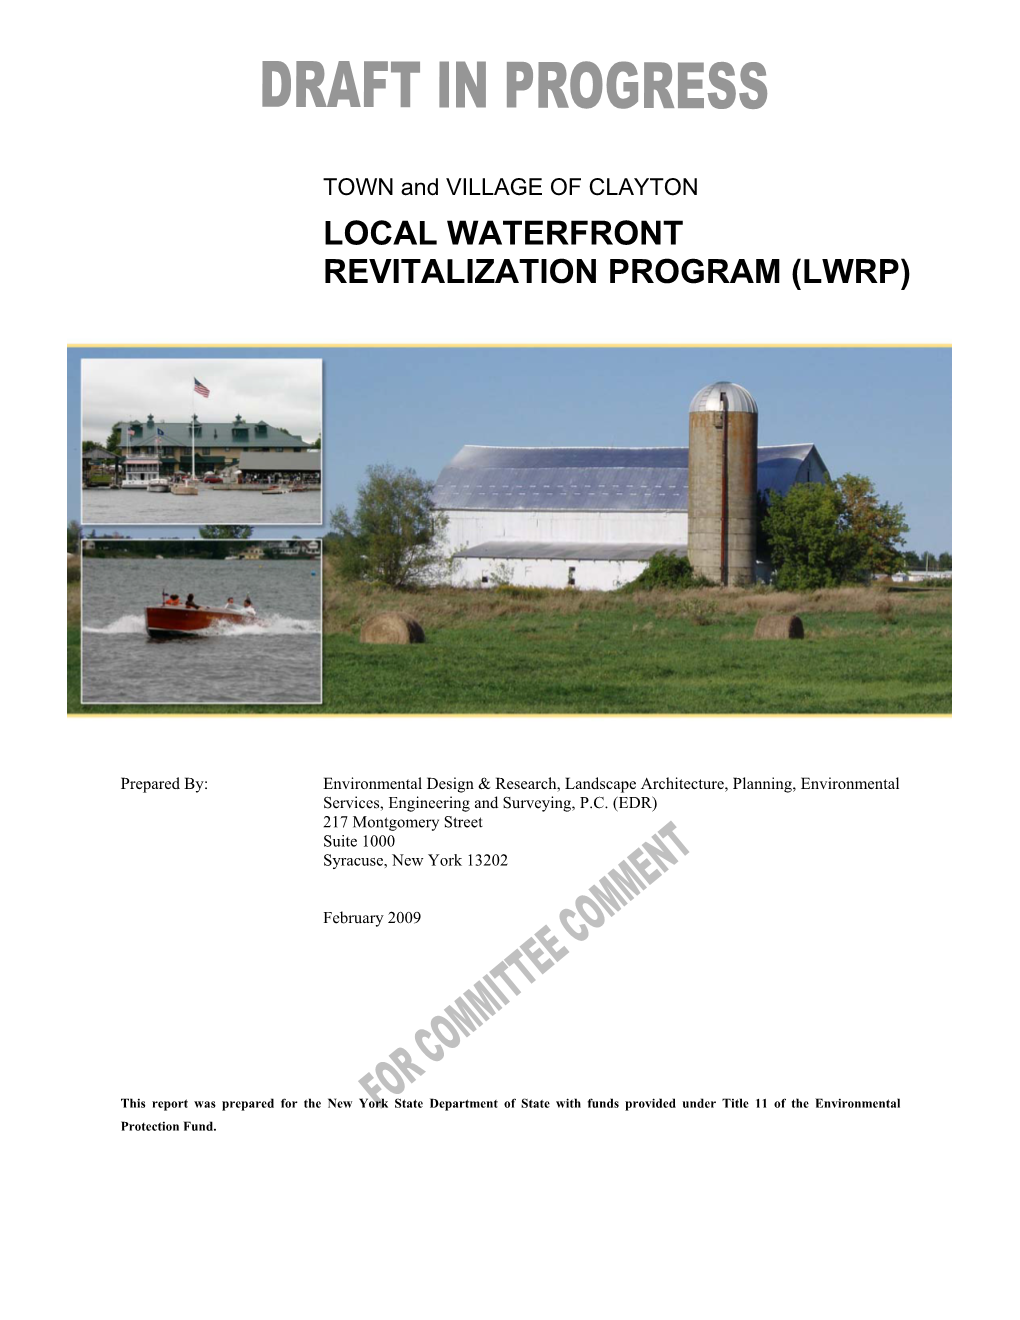 Local Waterfront Revitalization Program (Lwrp)